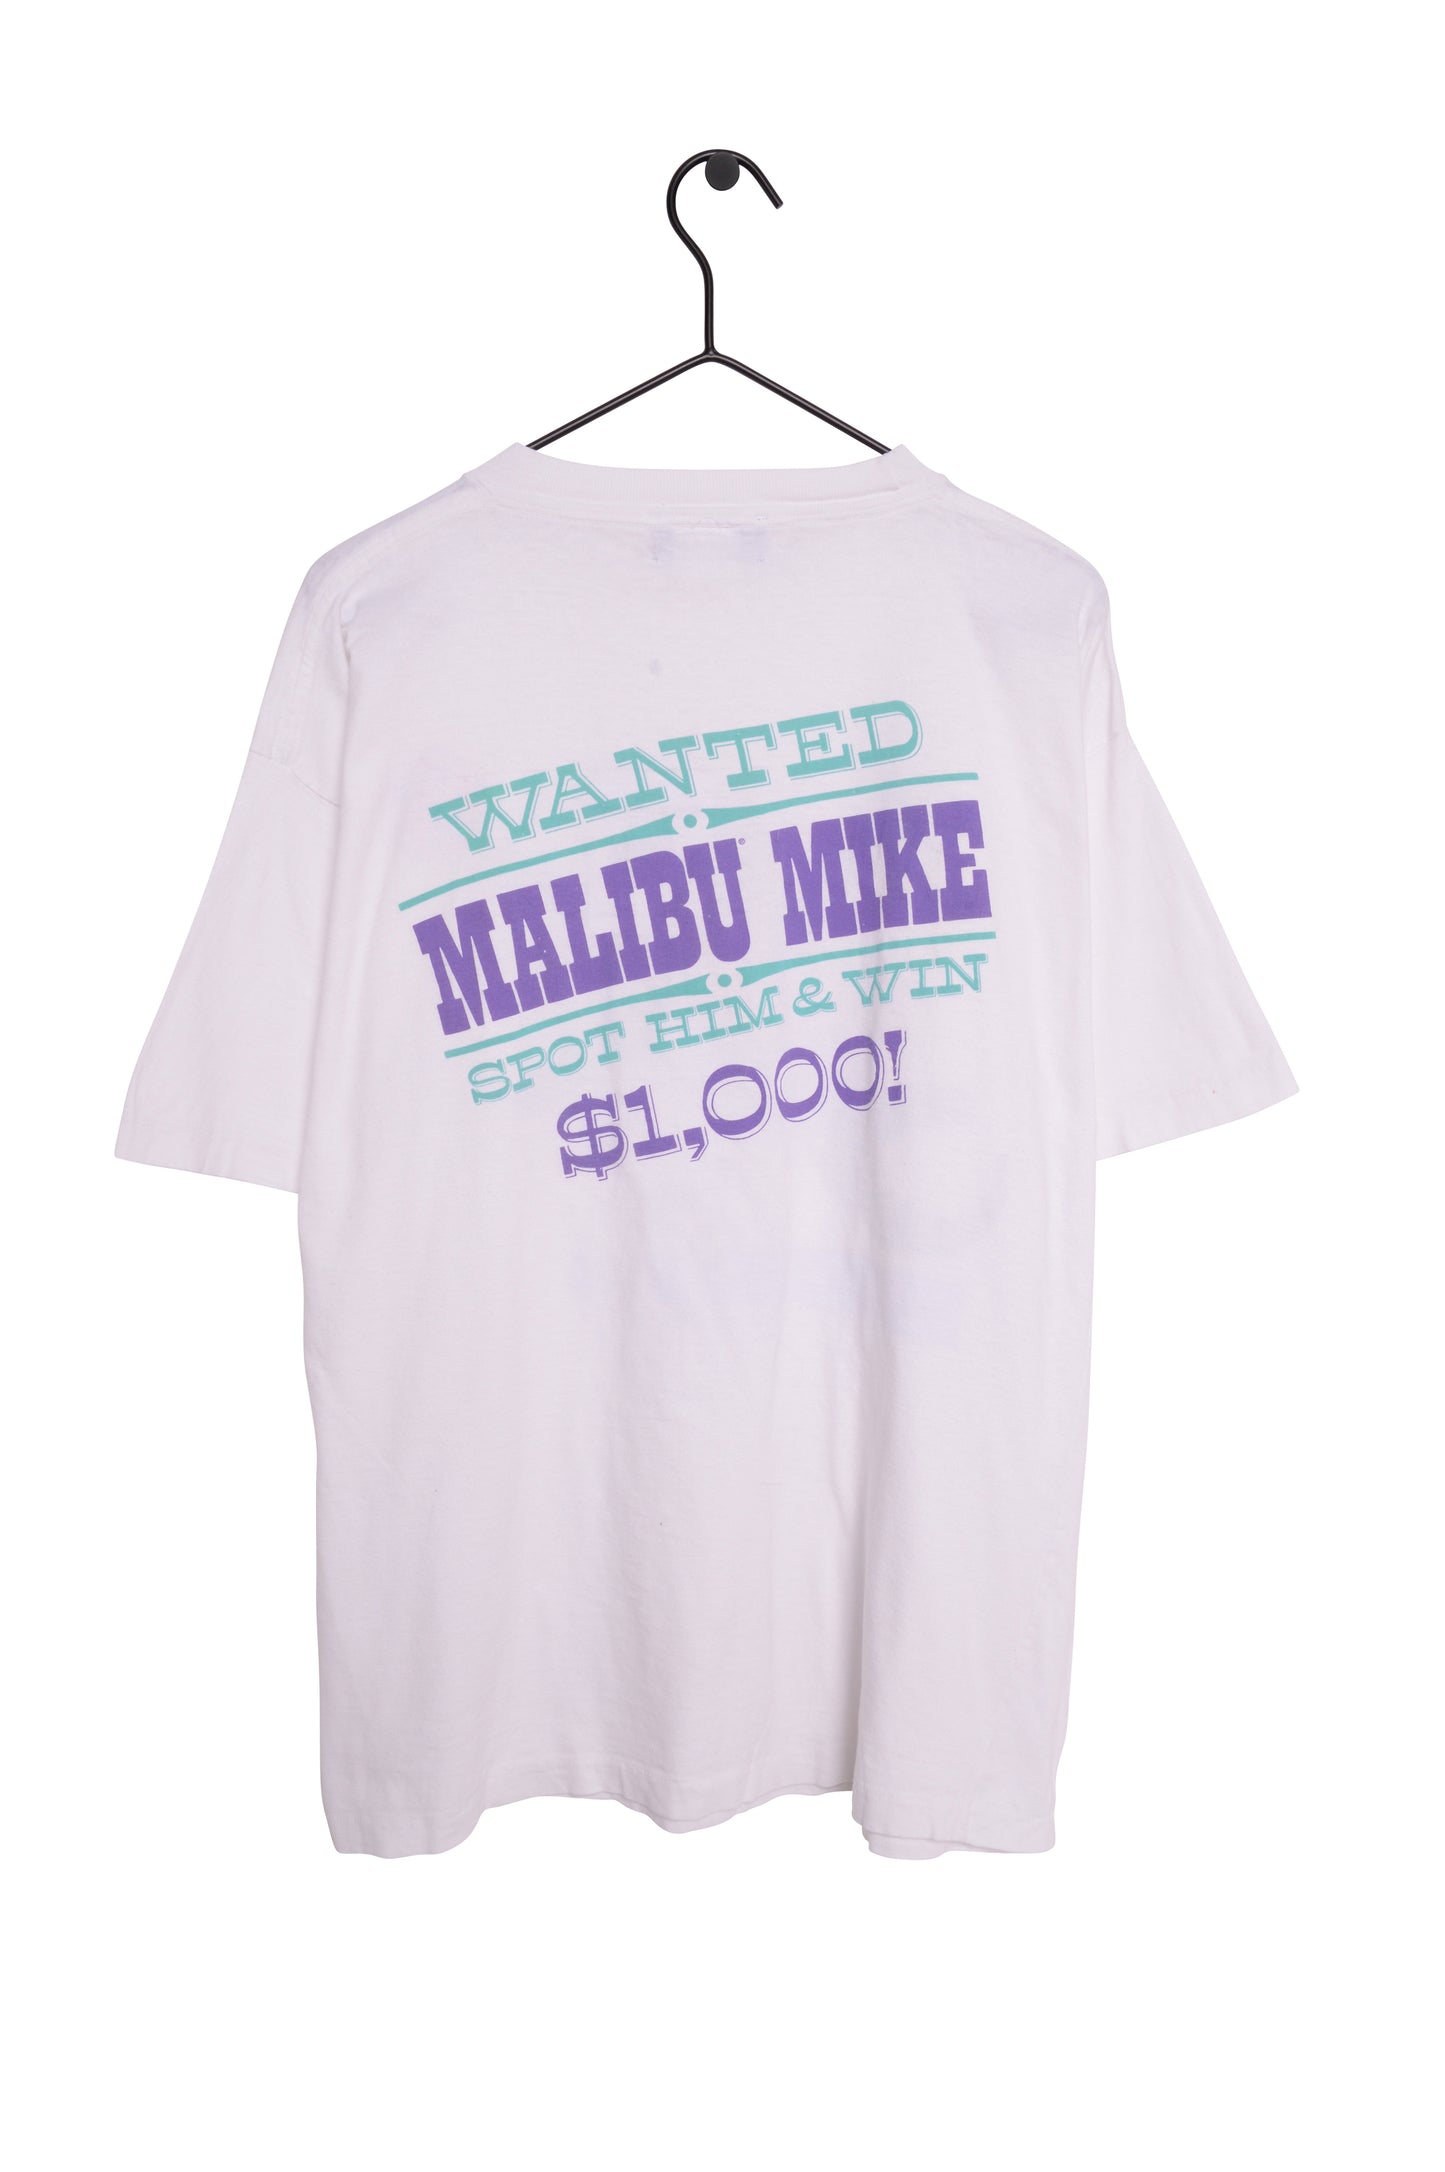 1990s Malibu Mike Alligator Tee